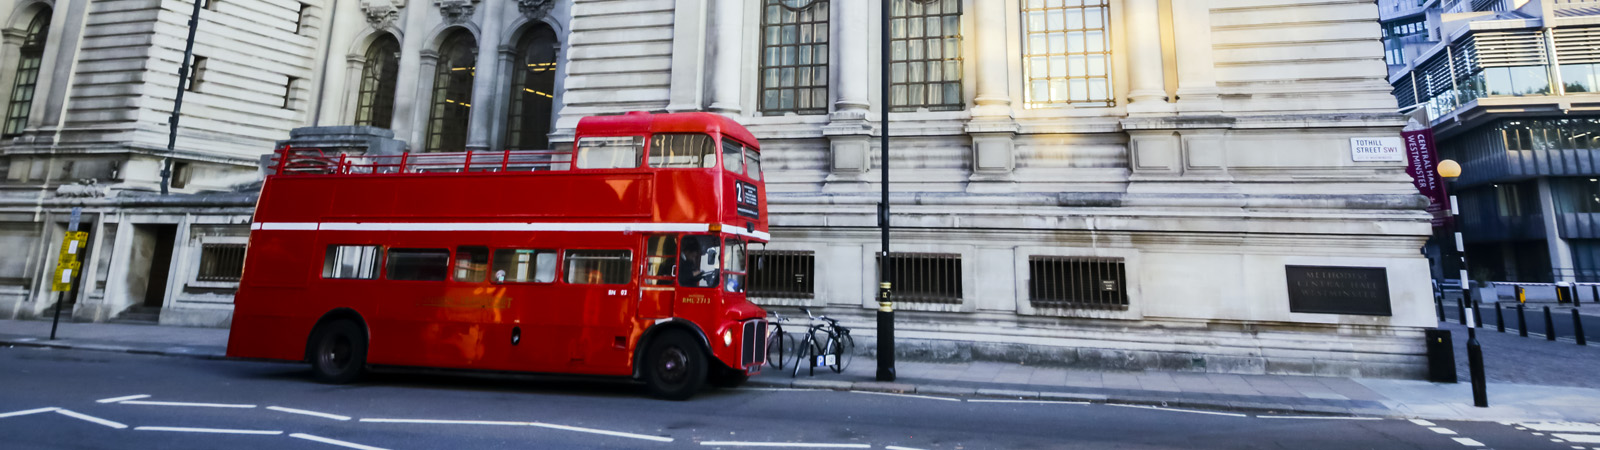 Vintage red bus tour London